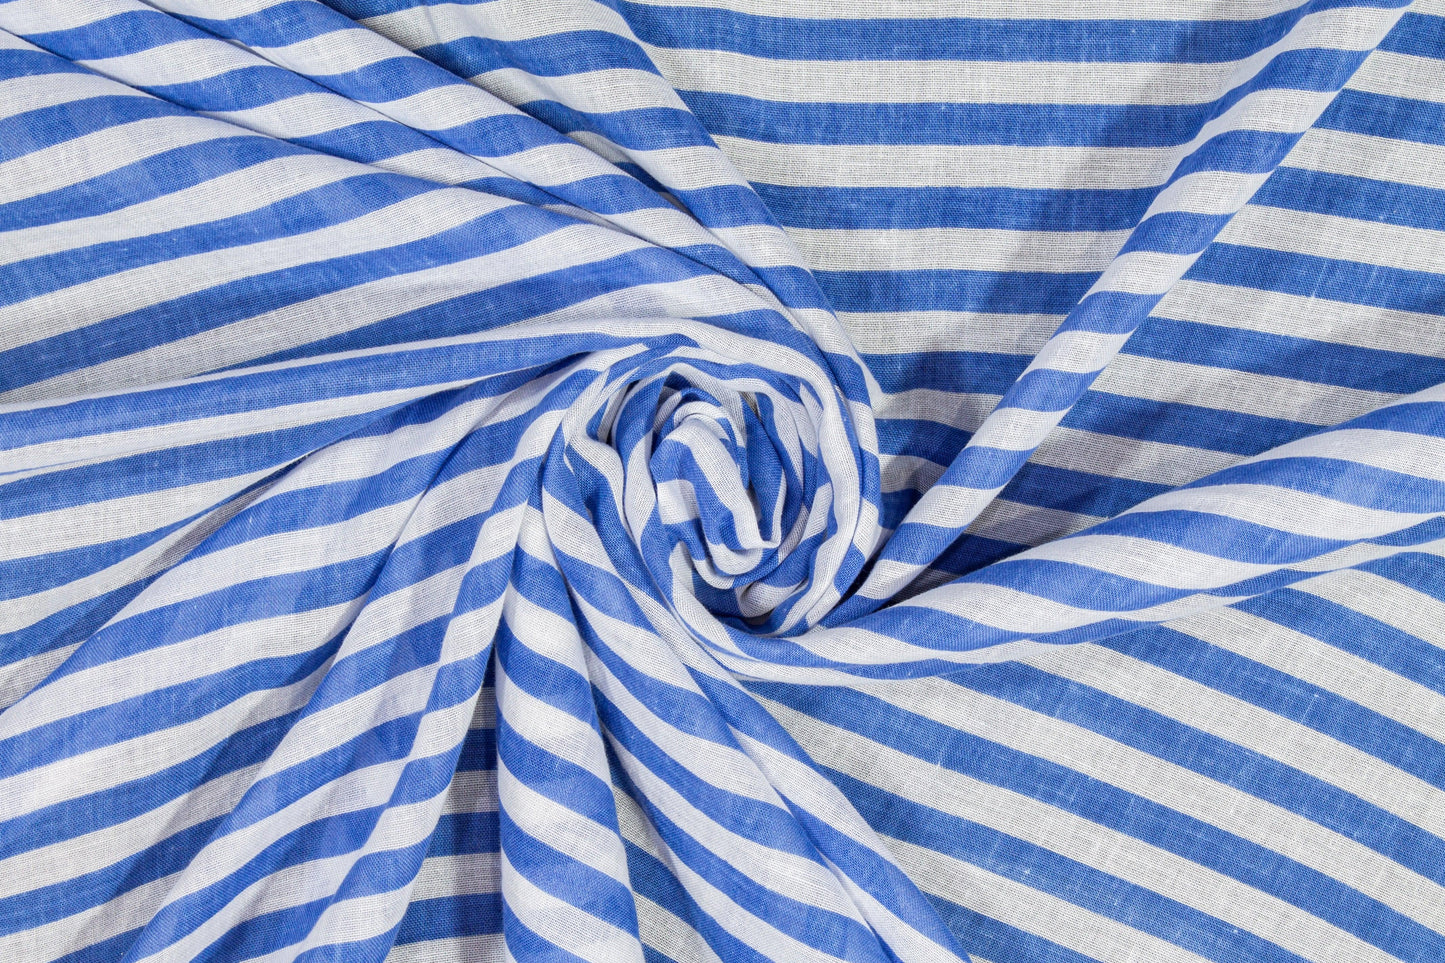 Striped Cotton Voile - Blue and White - Prime Fabrics